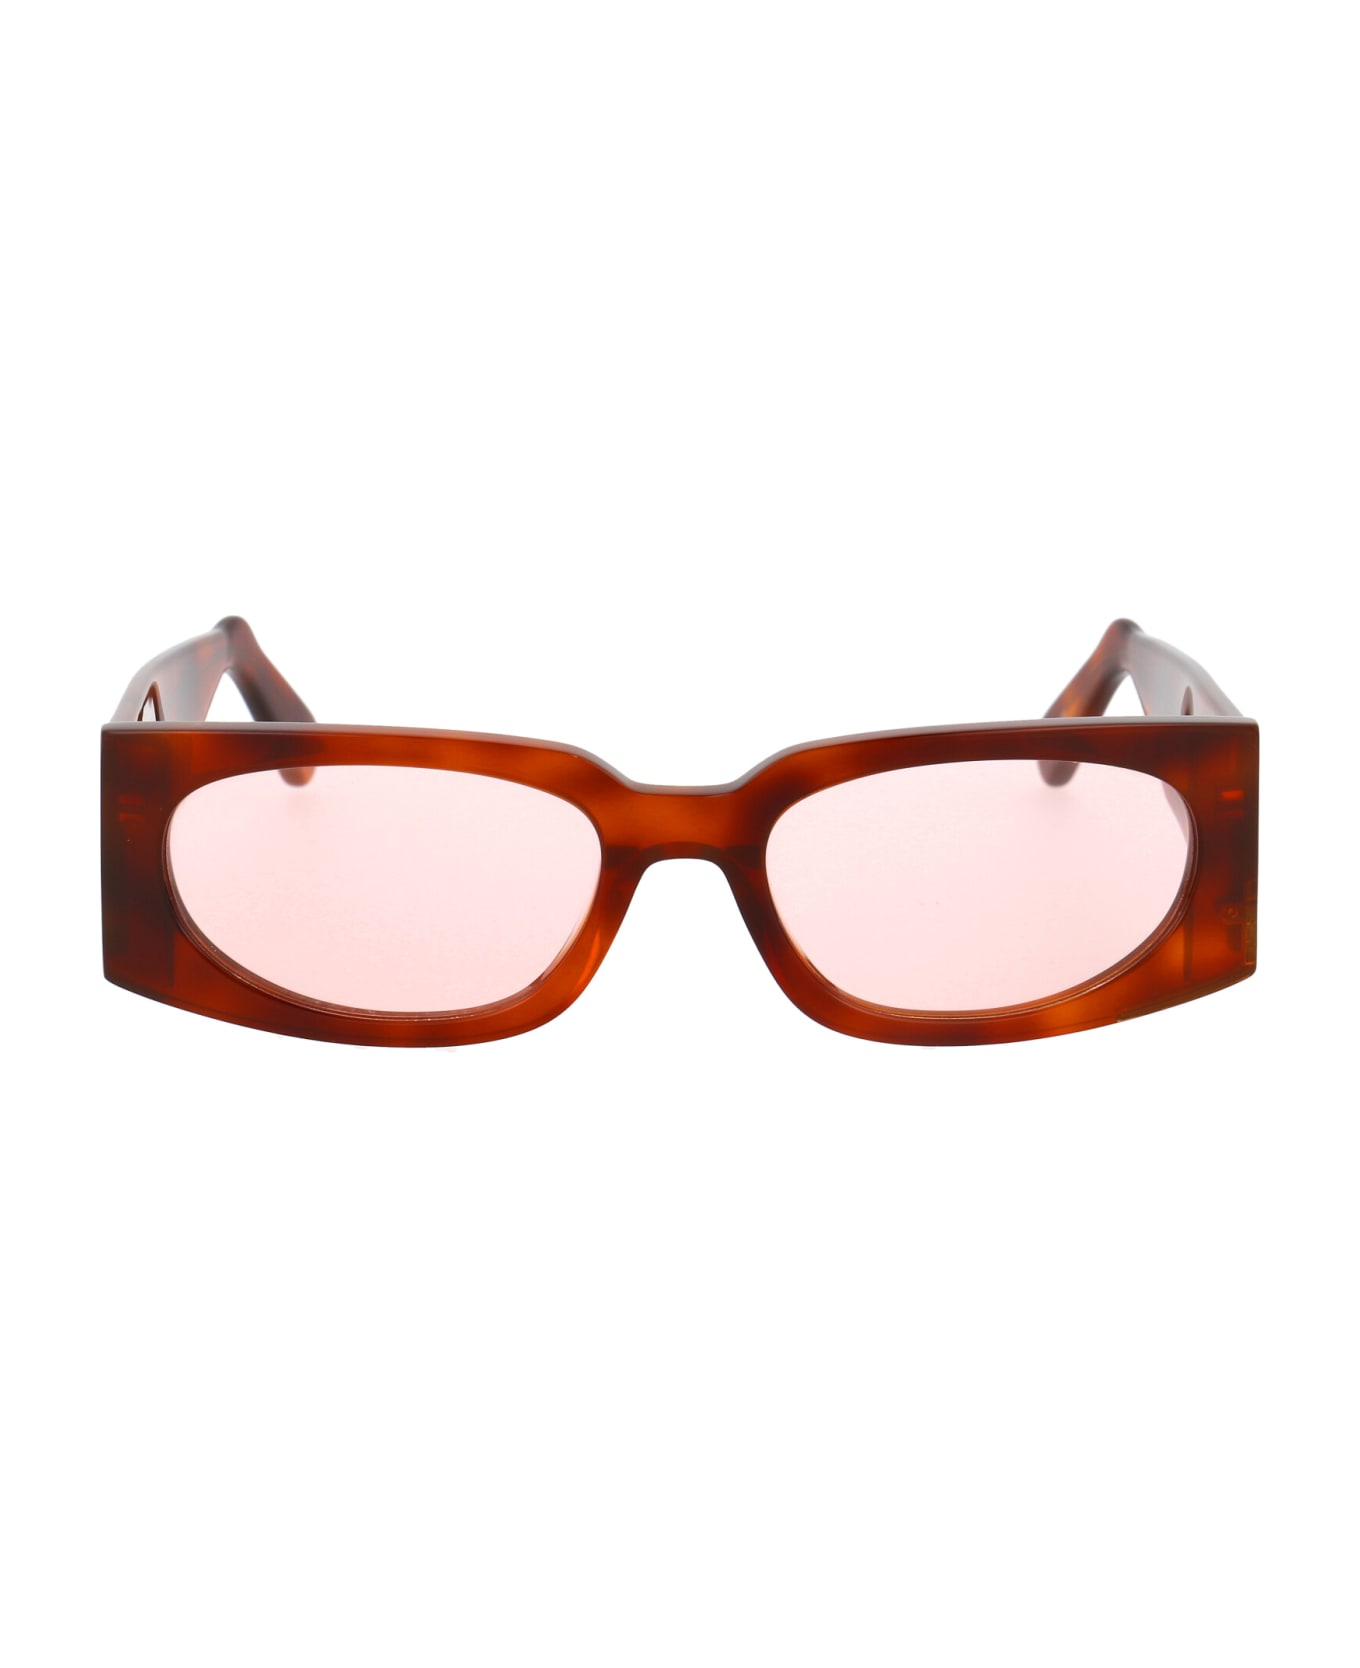 GCDS Gd0016 Sunglasses - 53S BROWN サングラス